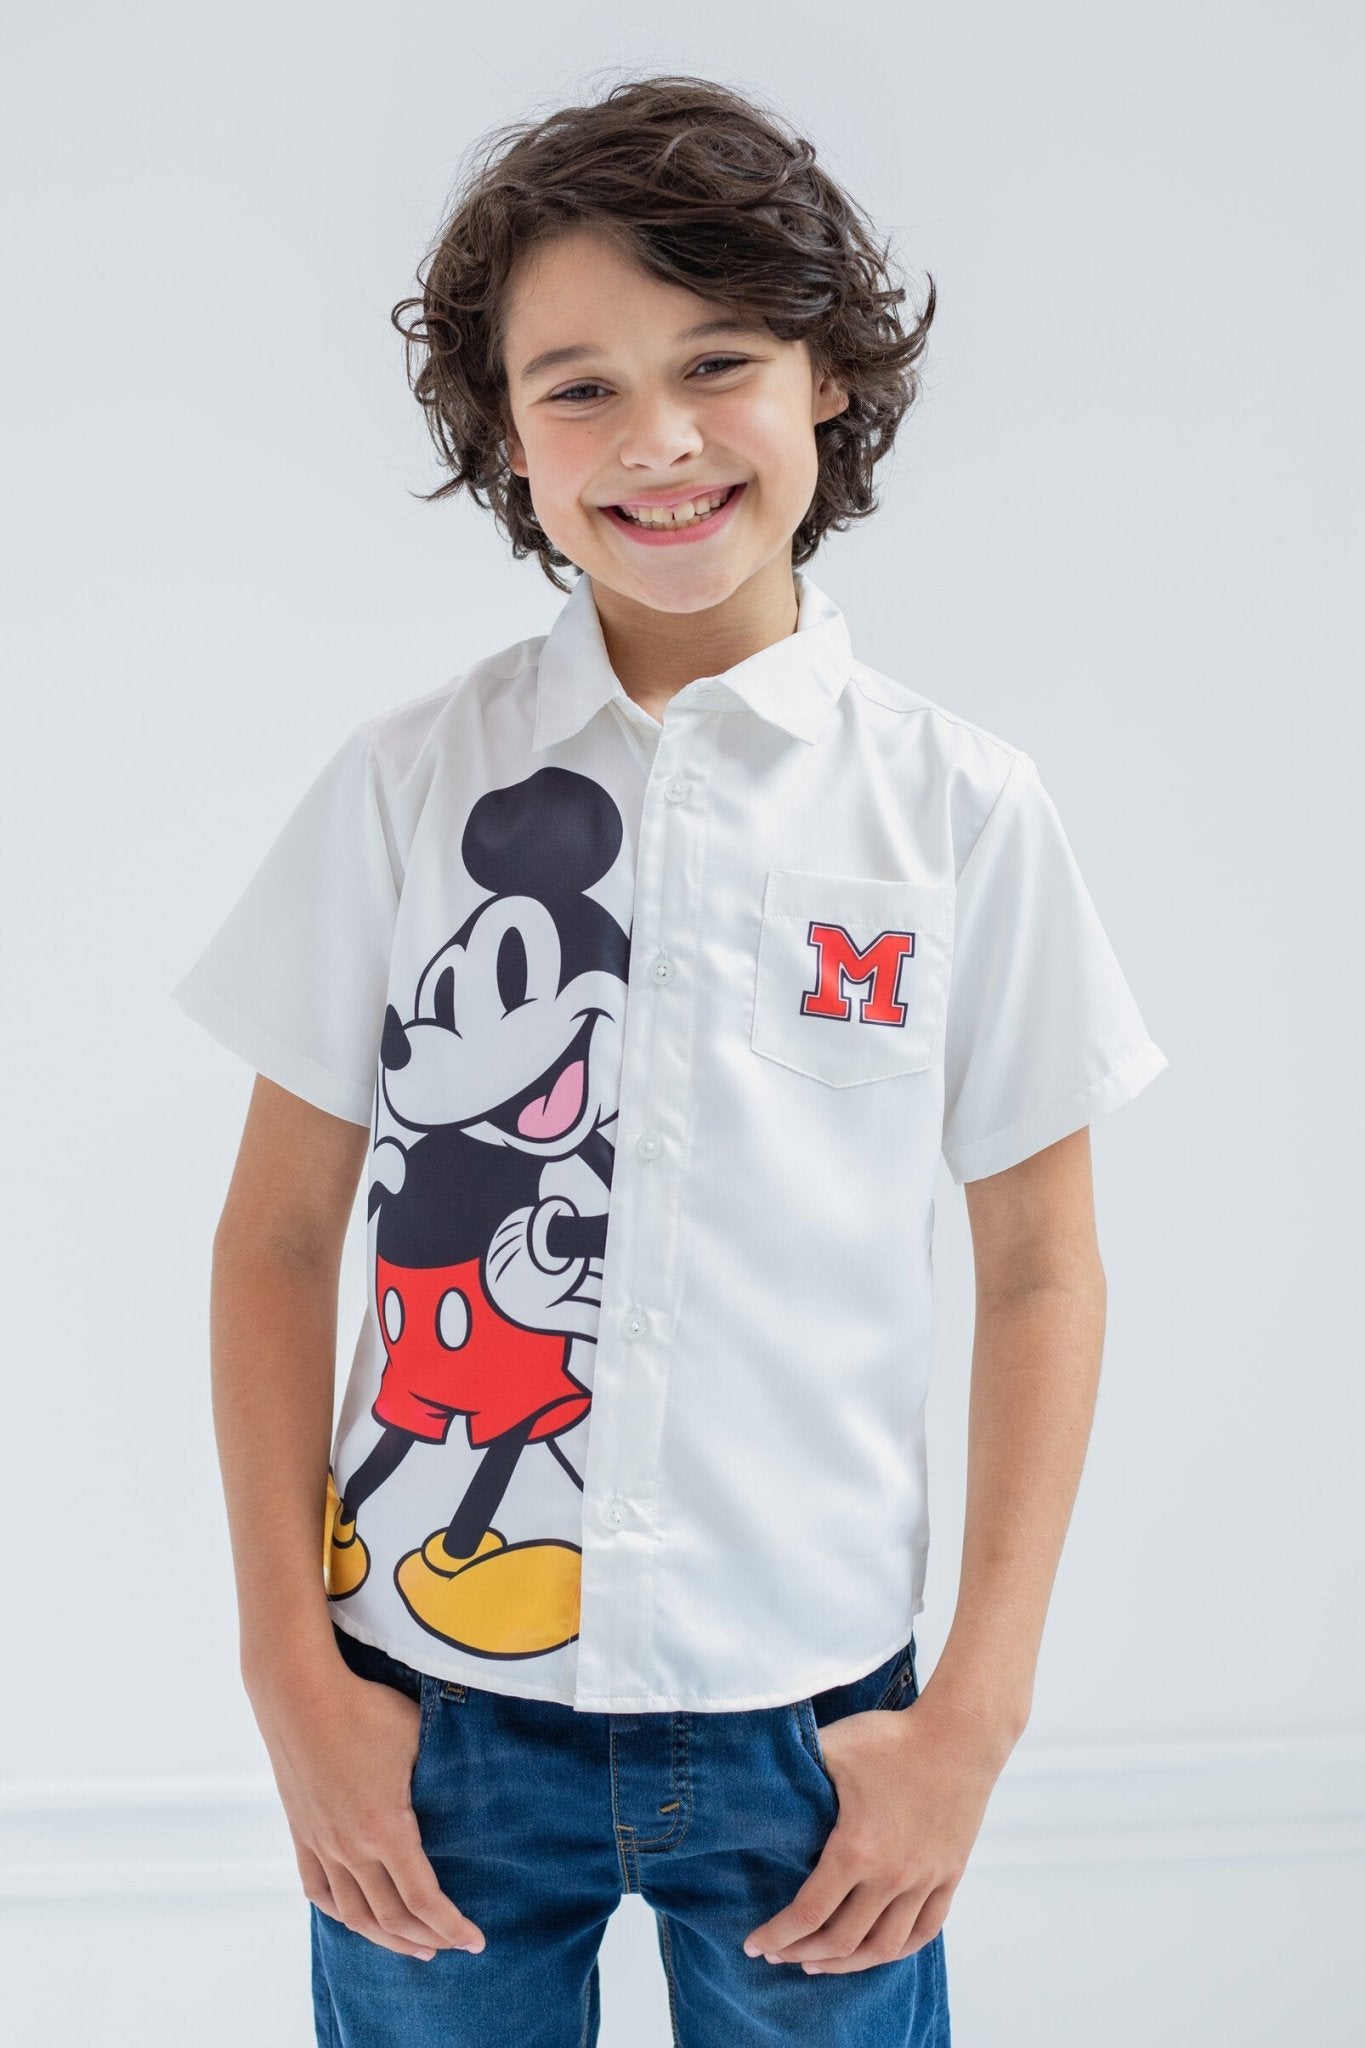 Disney Mickey Mouse Button Down Dress Shirt - imagikids